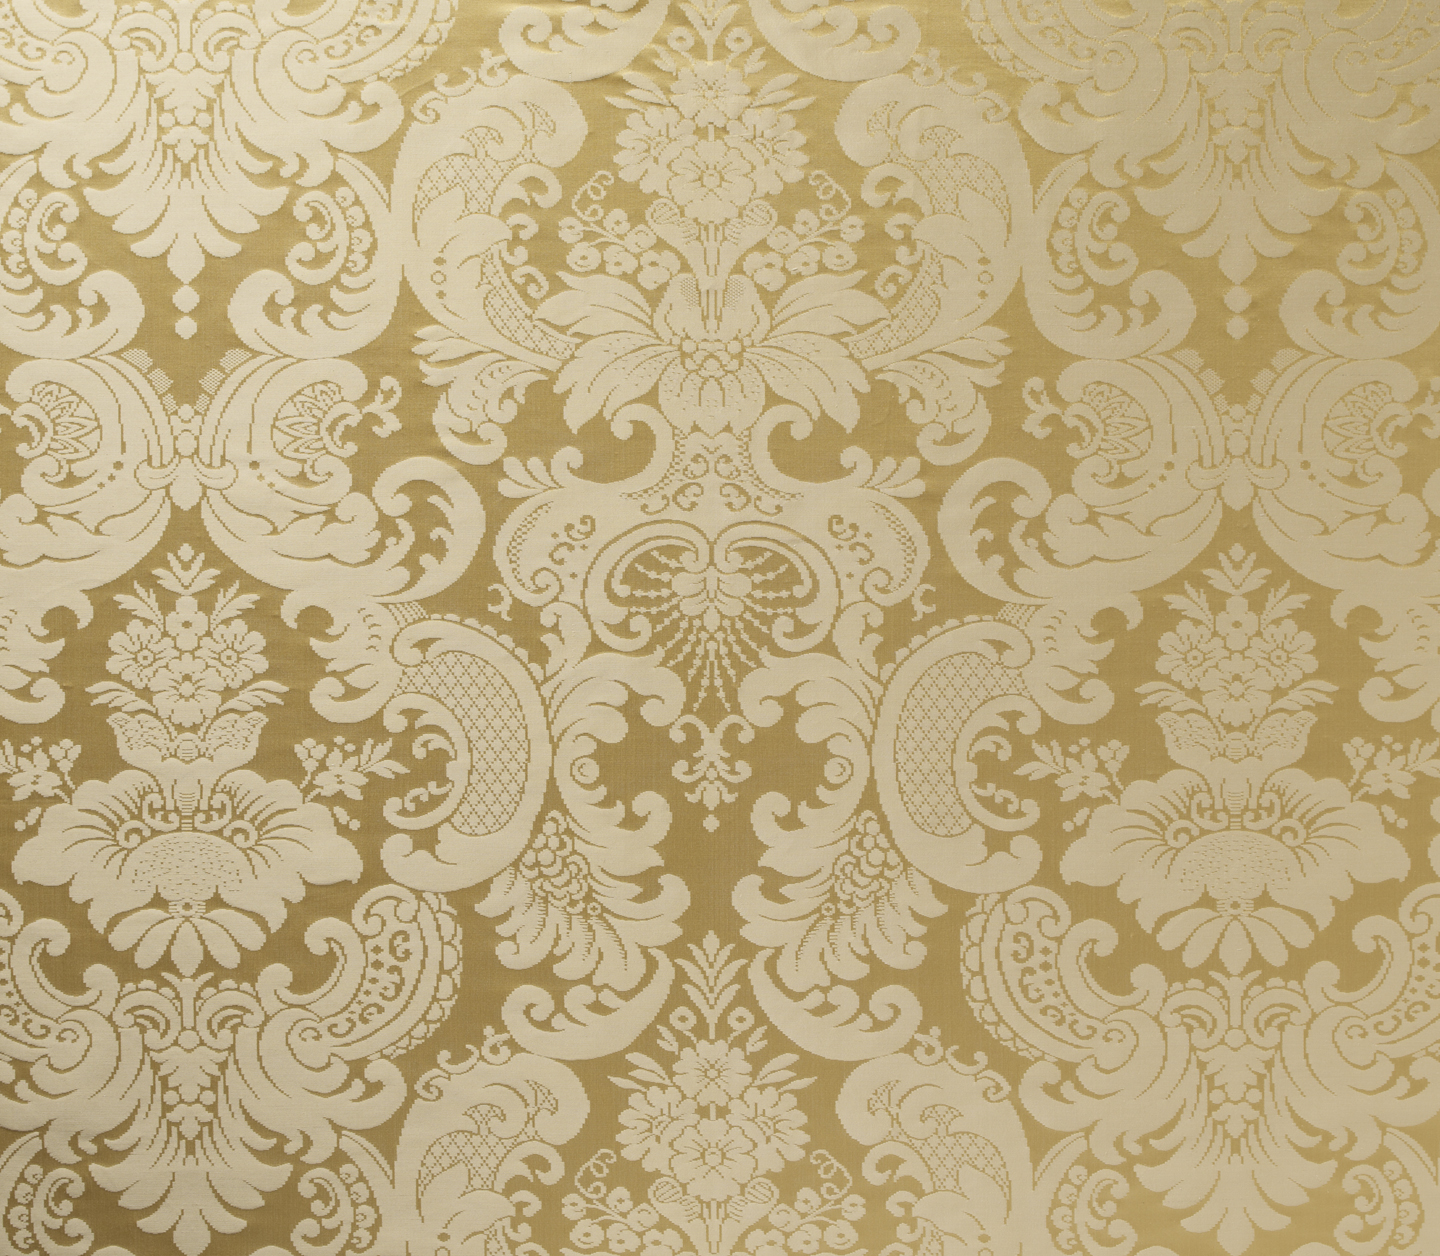 Gold damask wallpaper